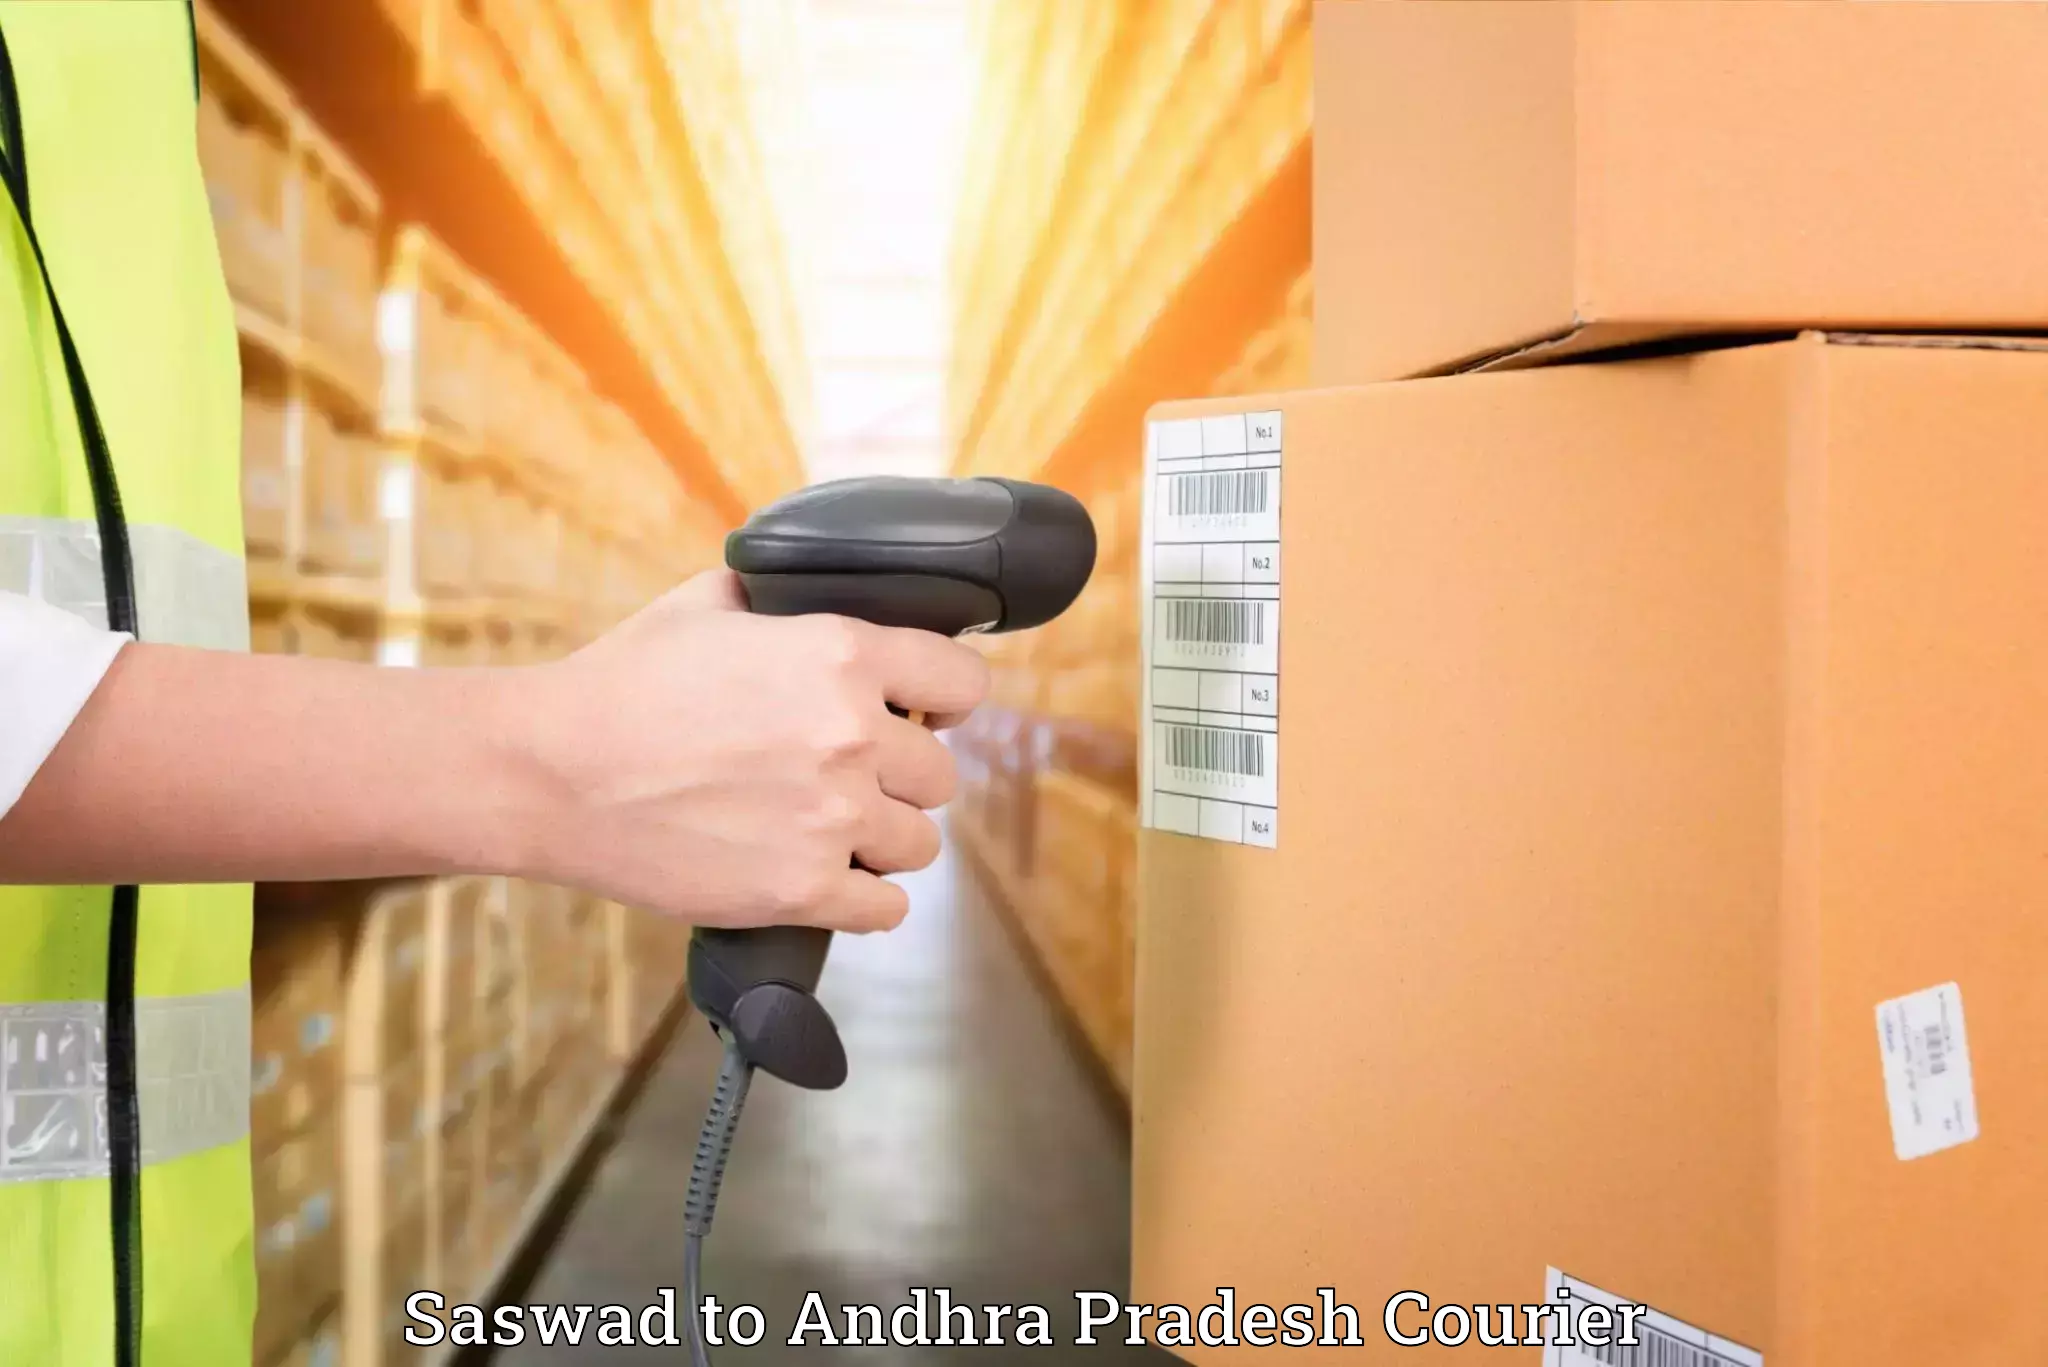 Professional moving company Saswad to Visakhapatnam Port